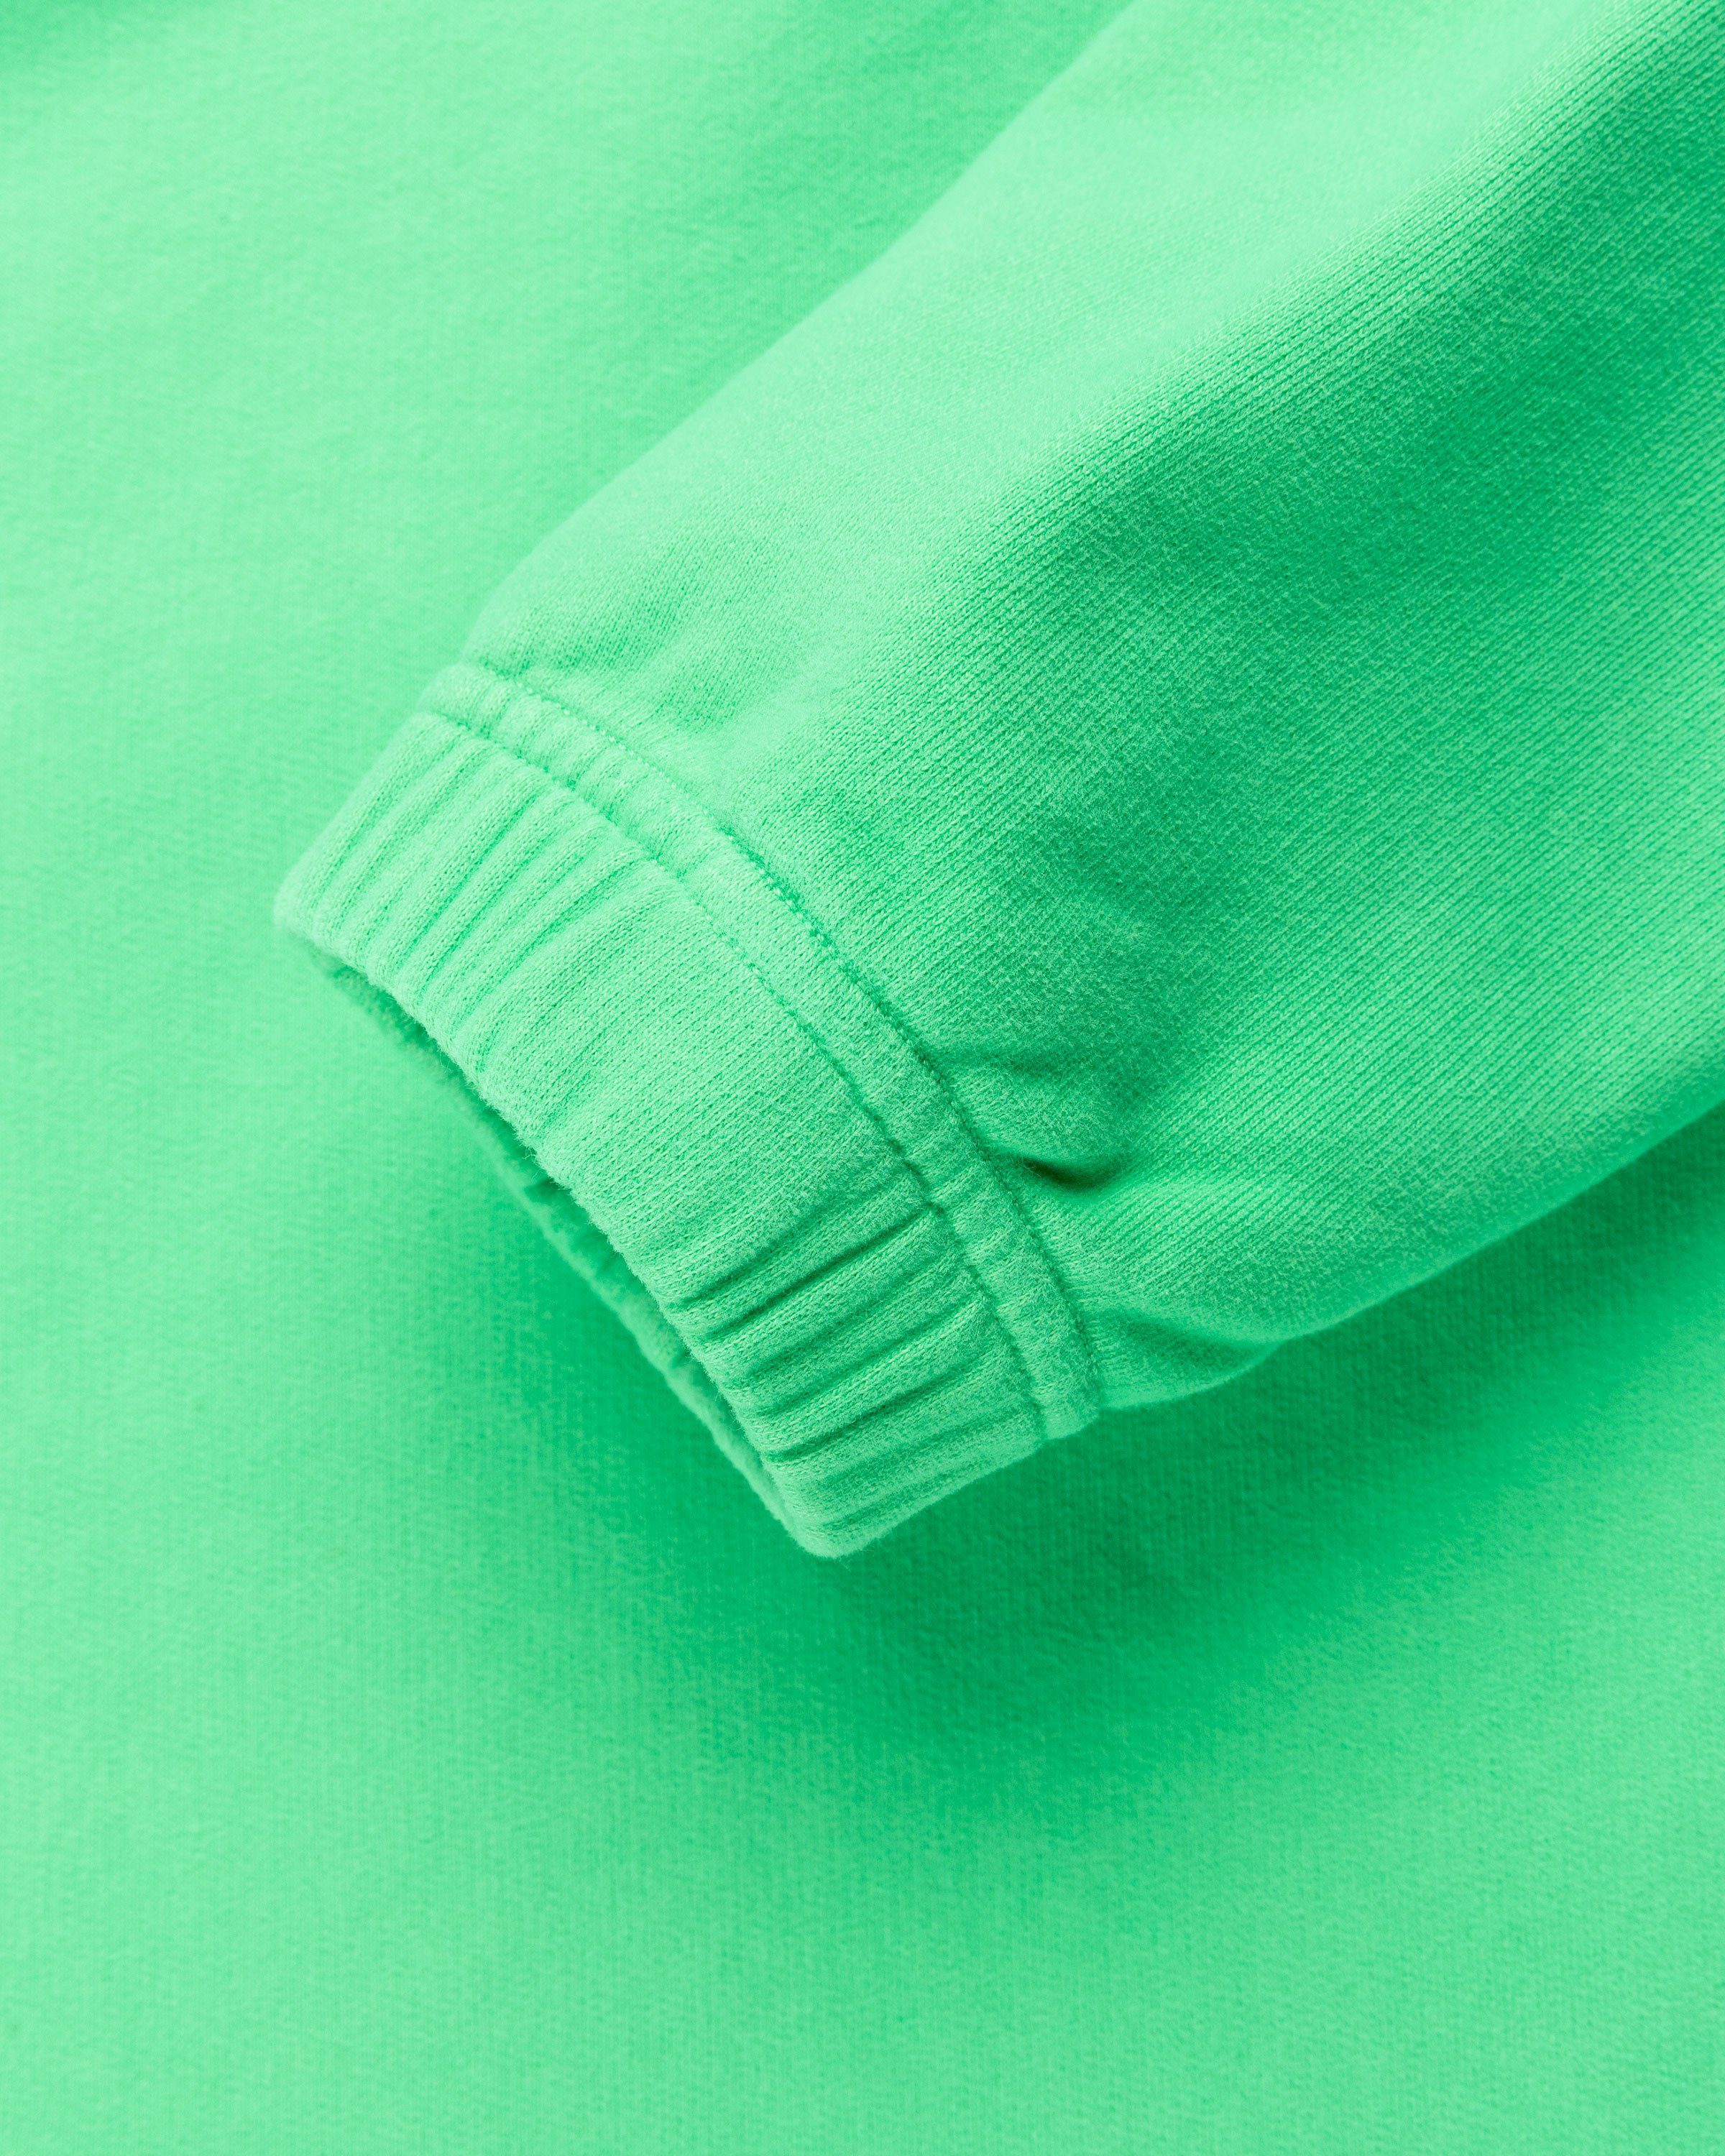 Stone Island - Garment-Dyed Fleece Crewneck Sweatshirt Light Green - Clothing - Green - Image 6